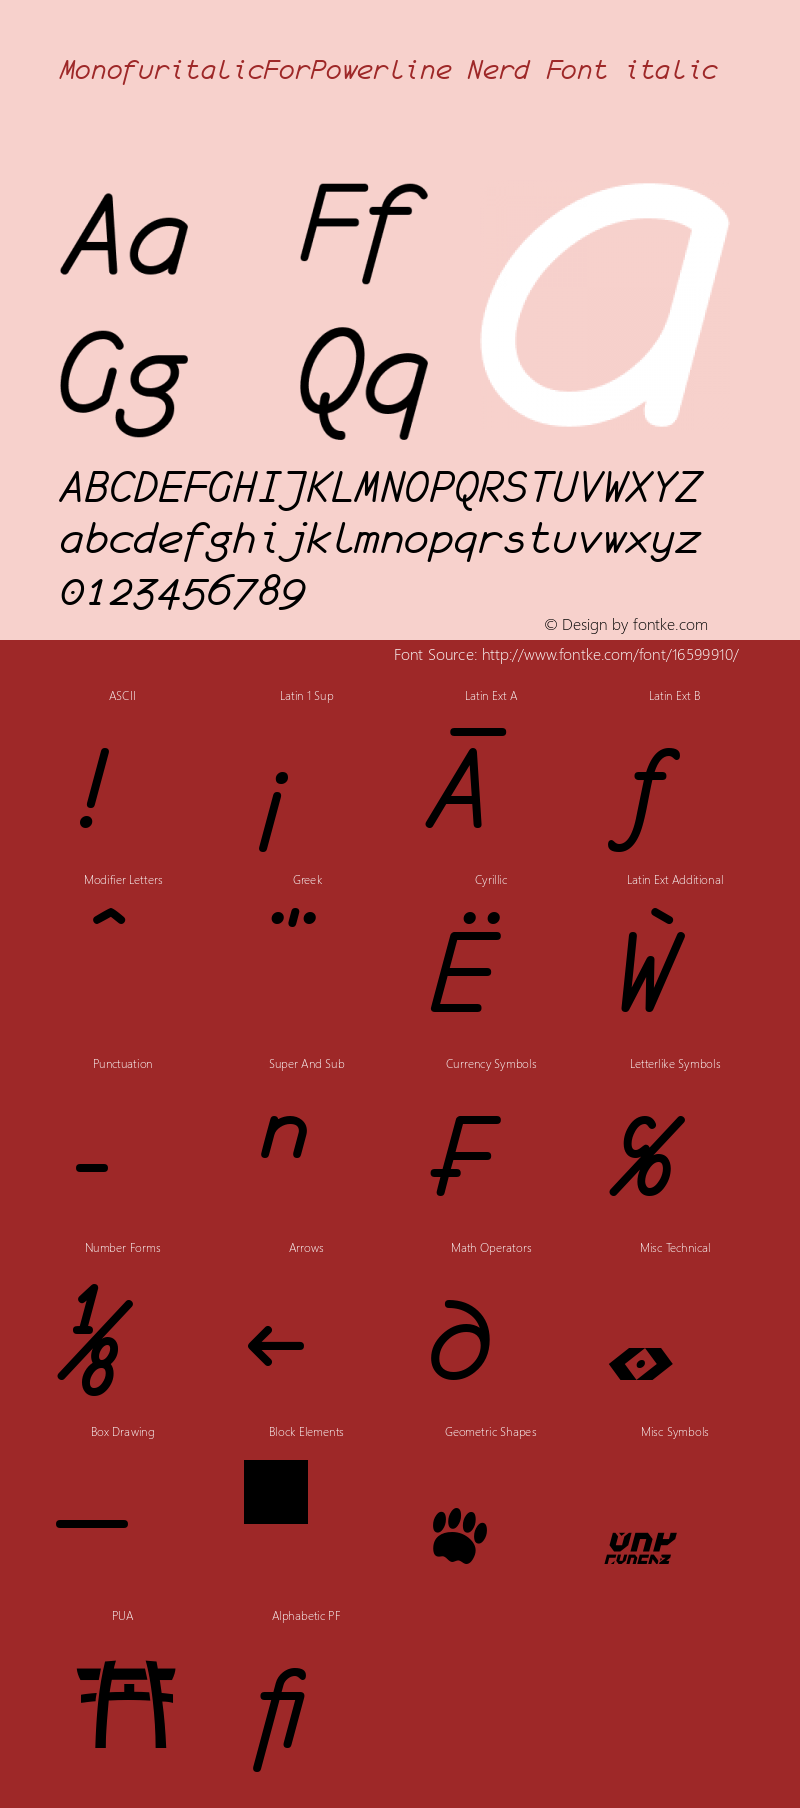 MonofuritalicForPowerline Nerd Font italic unci 1.0 2000-04-14图片样张